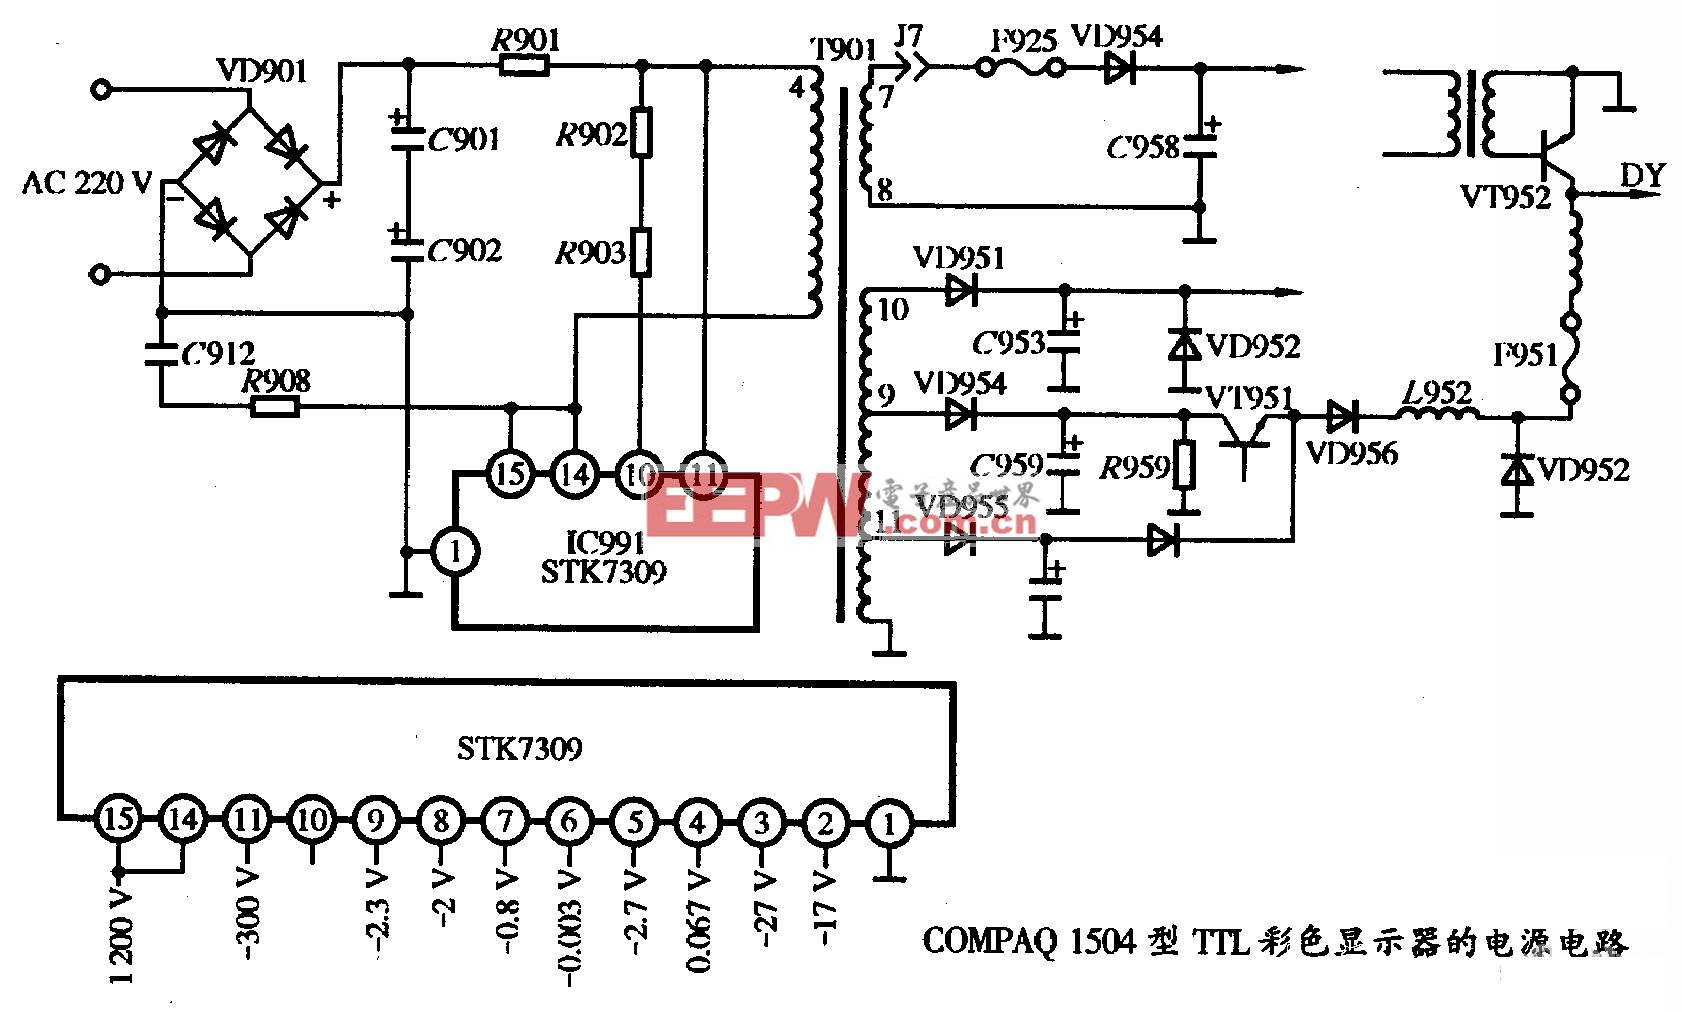 COMPAQ 1504型TTL彩色显示器的电源电路图